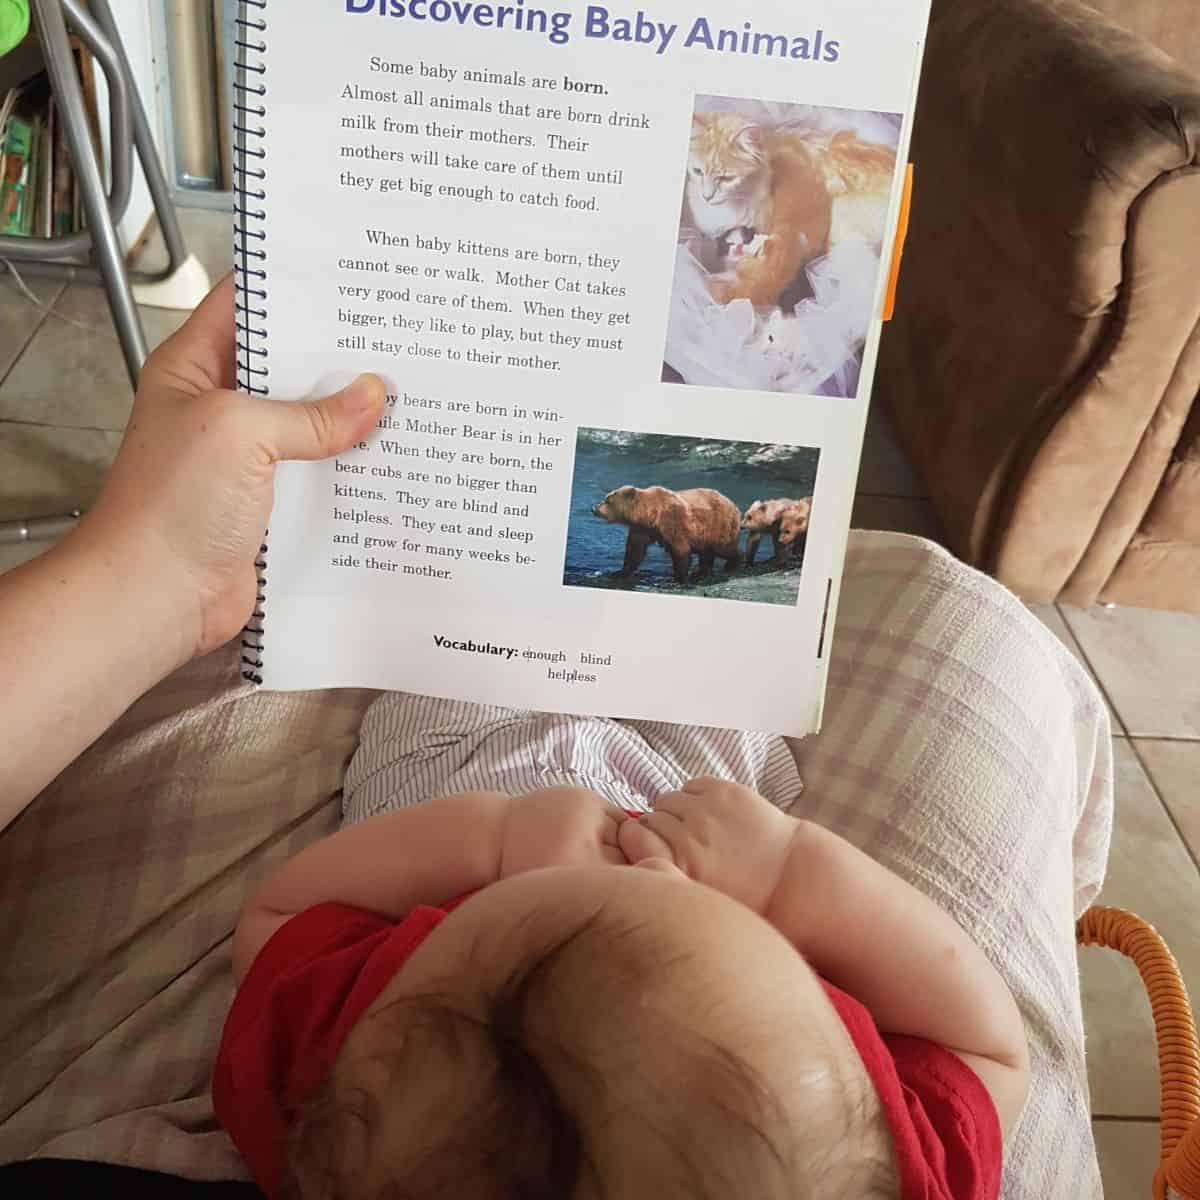 baby looking at book